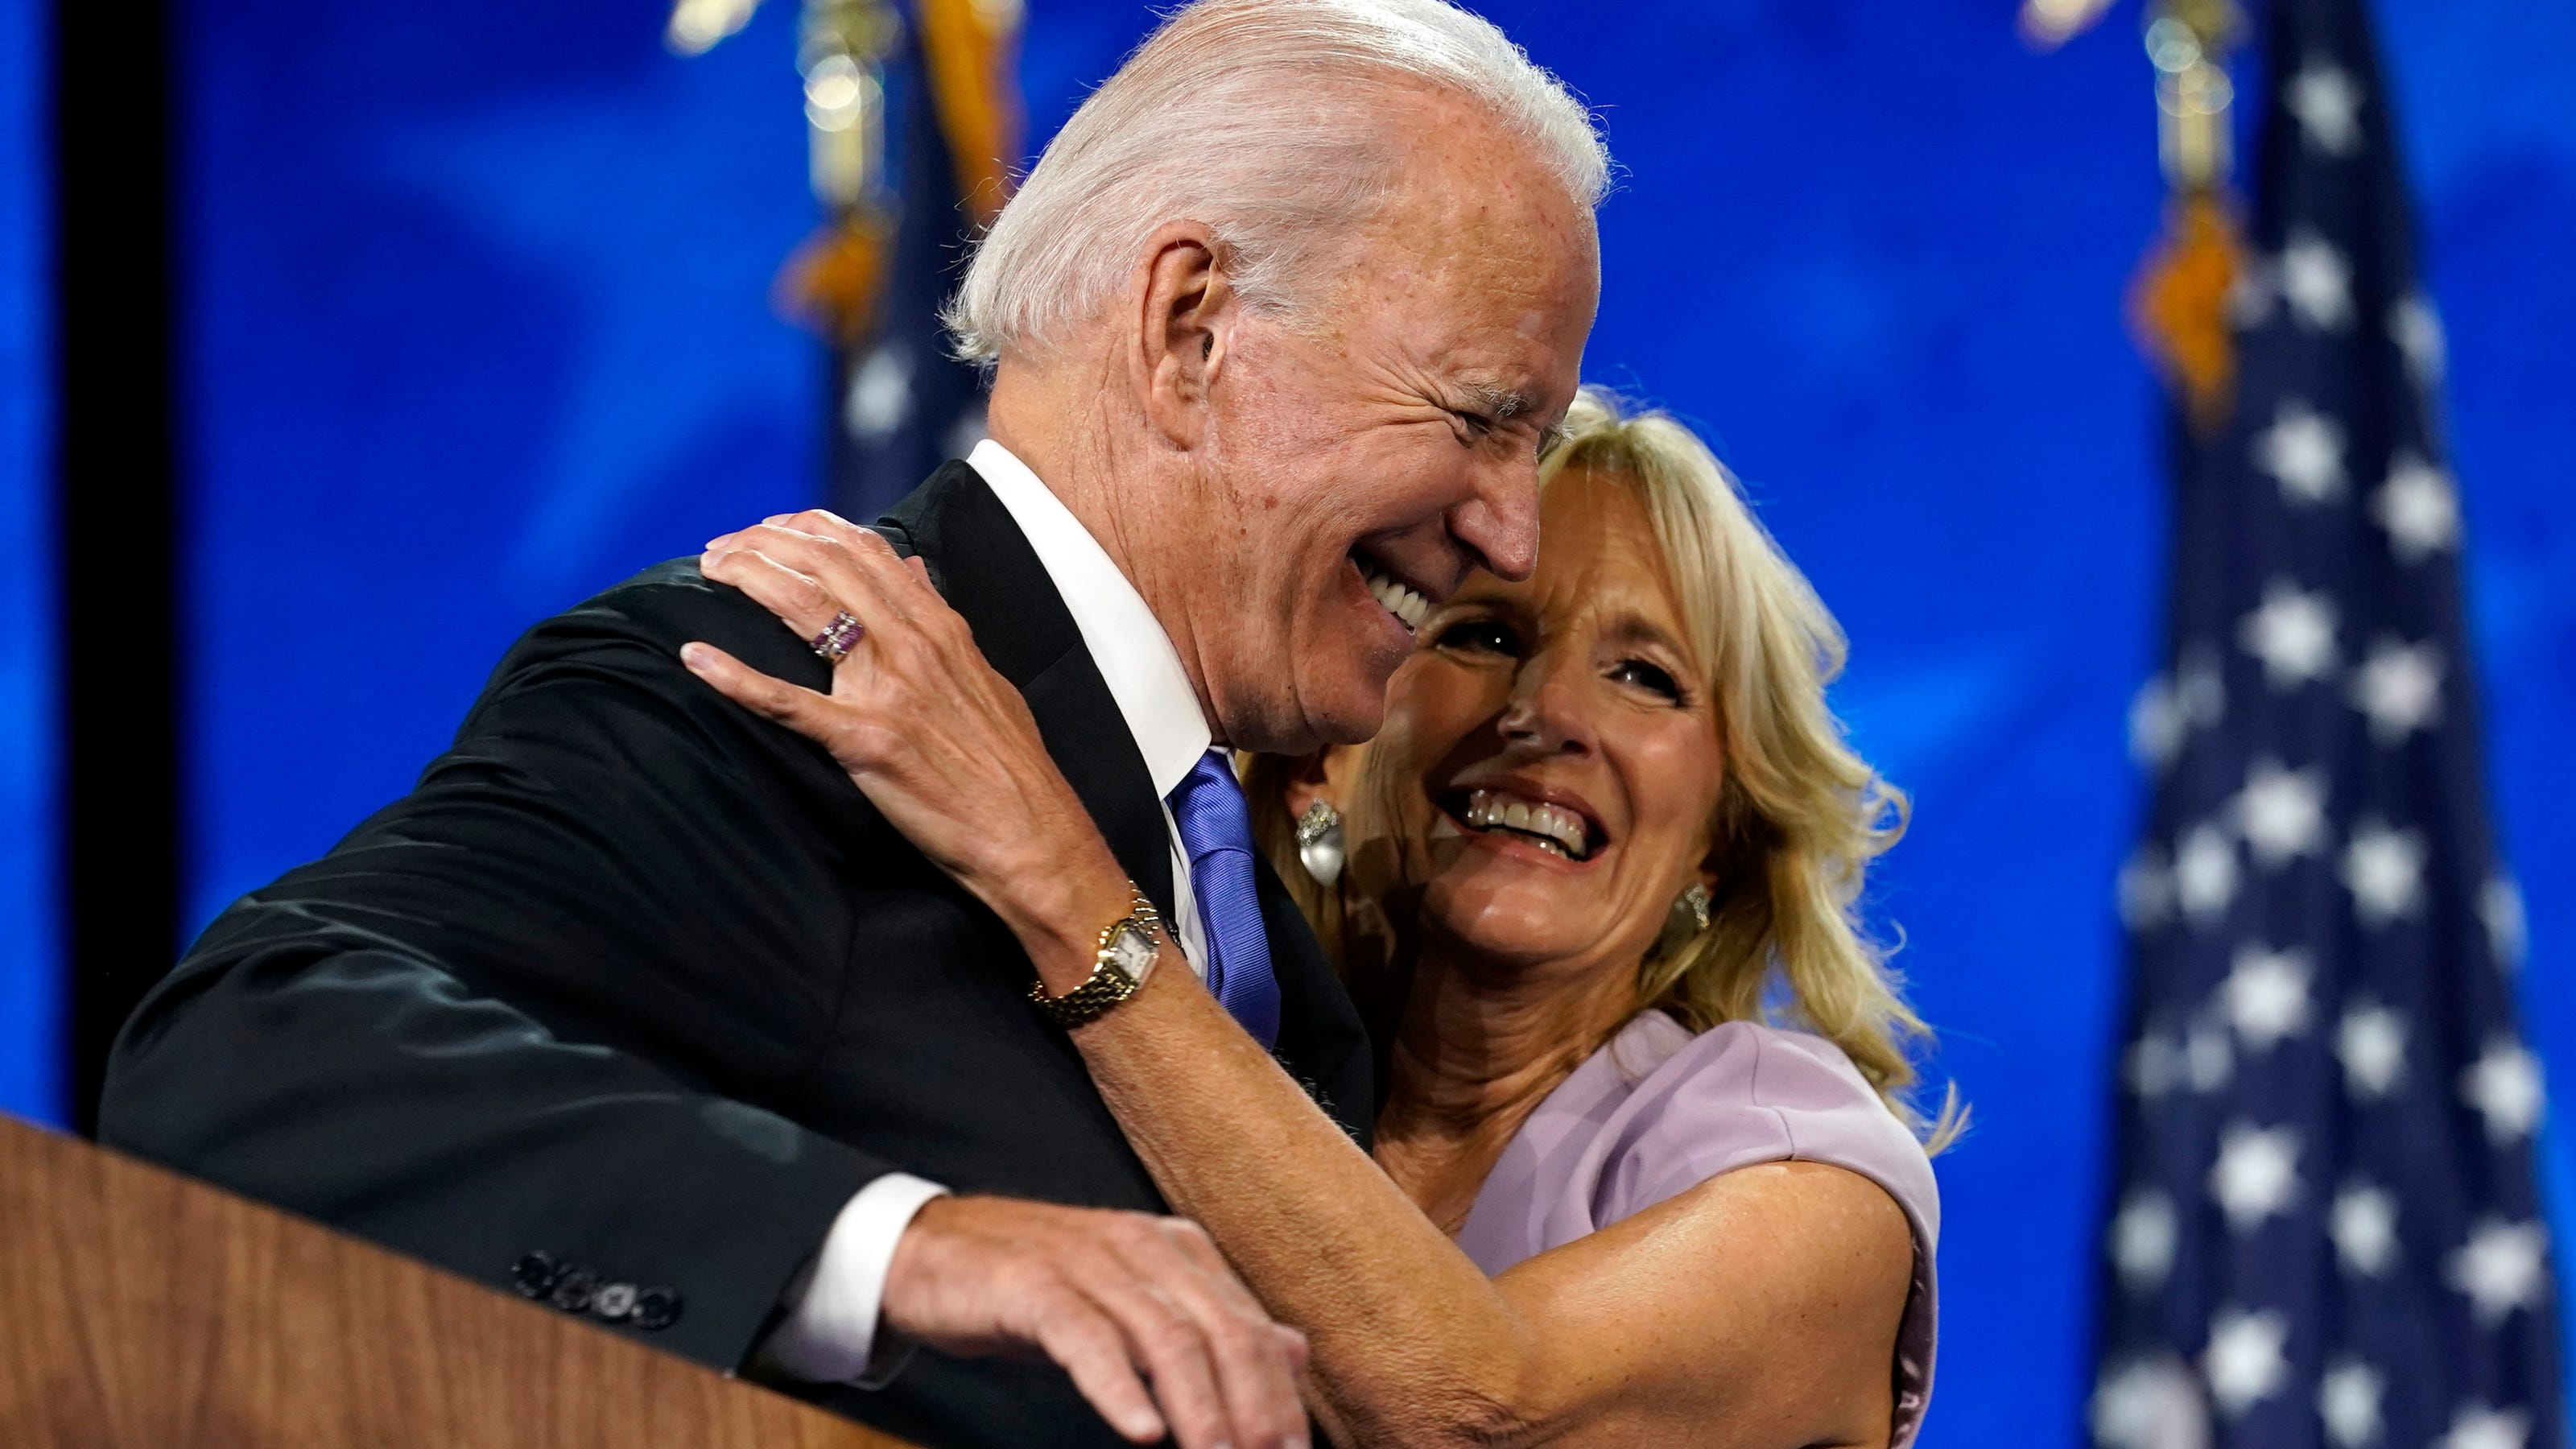 New Year's Eve Joe Biden, Jill Biden to appear on 'Dick Clark' show